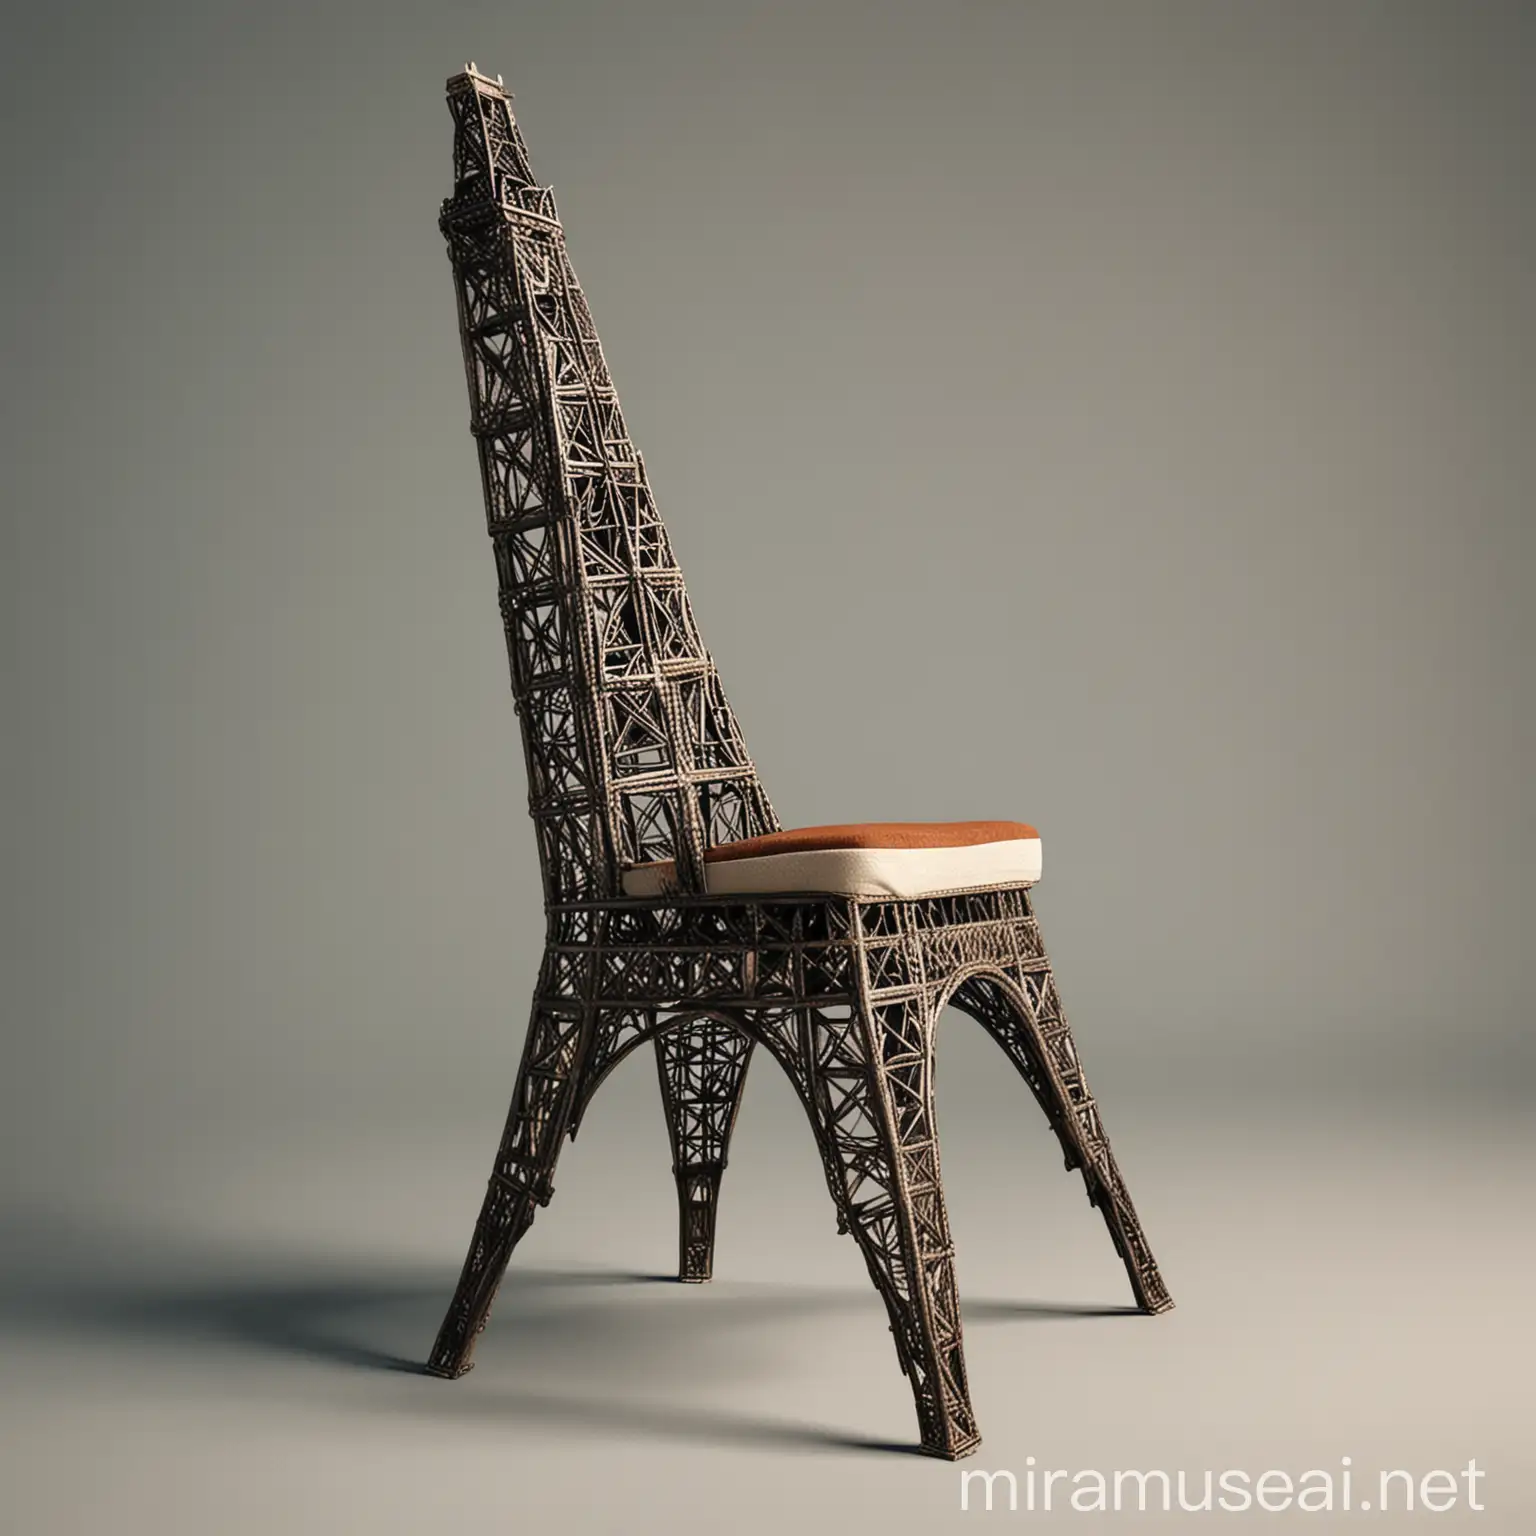 Unique Eiffel Tower Inspired Chair Design